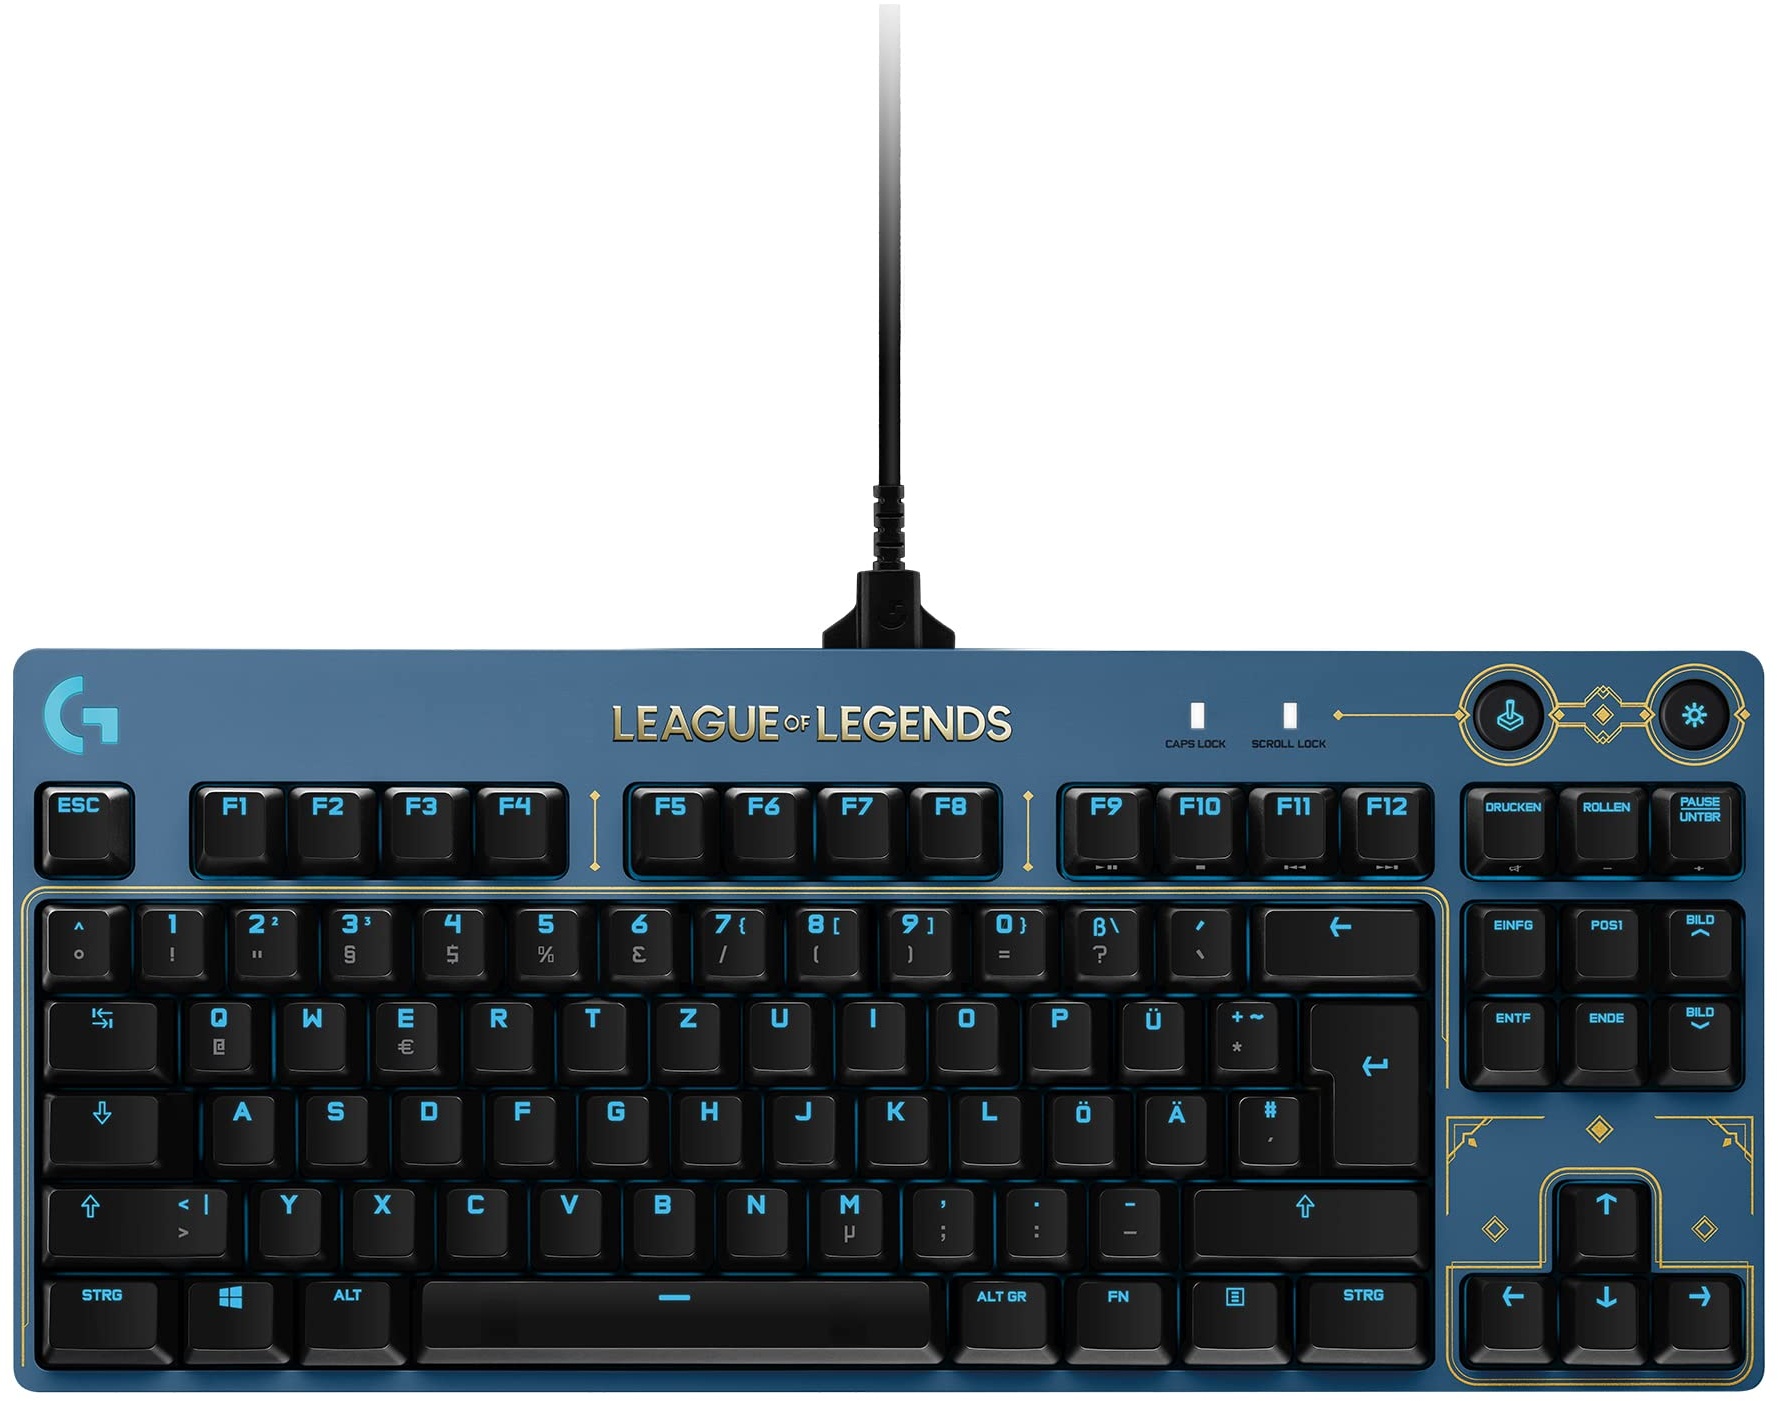 Logitech G PRO Mechanische Gaming-Tastatur - Portabel und ohne Nummernblock, Abnehmbares USB-Kabel, LIGHTSYNC RGB beleuchtete Tasten, Offizielle League of Legends Edition